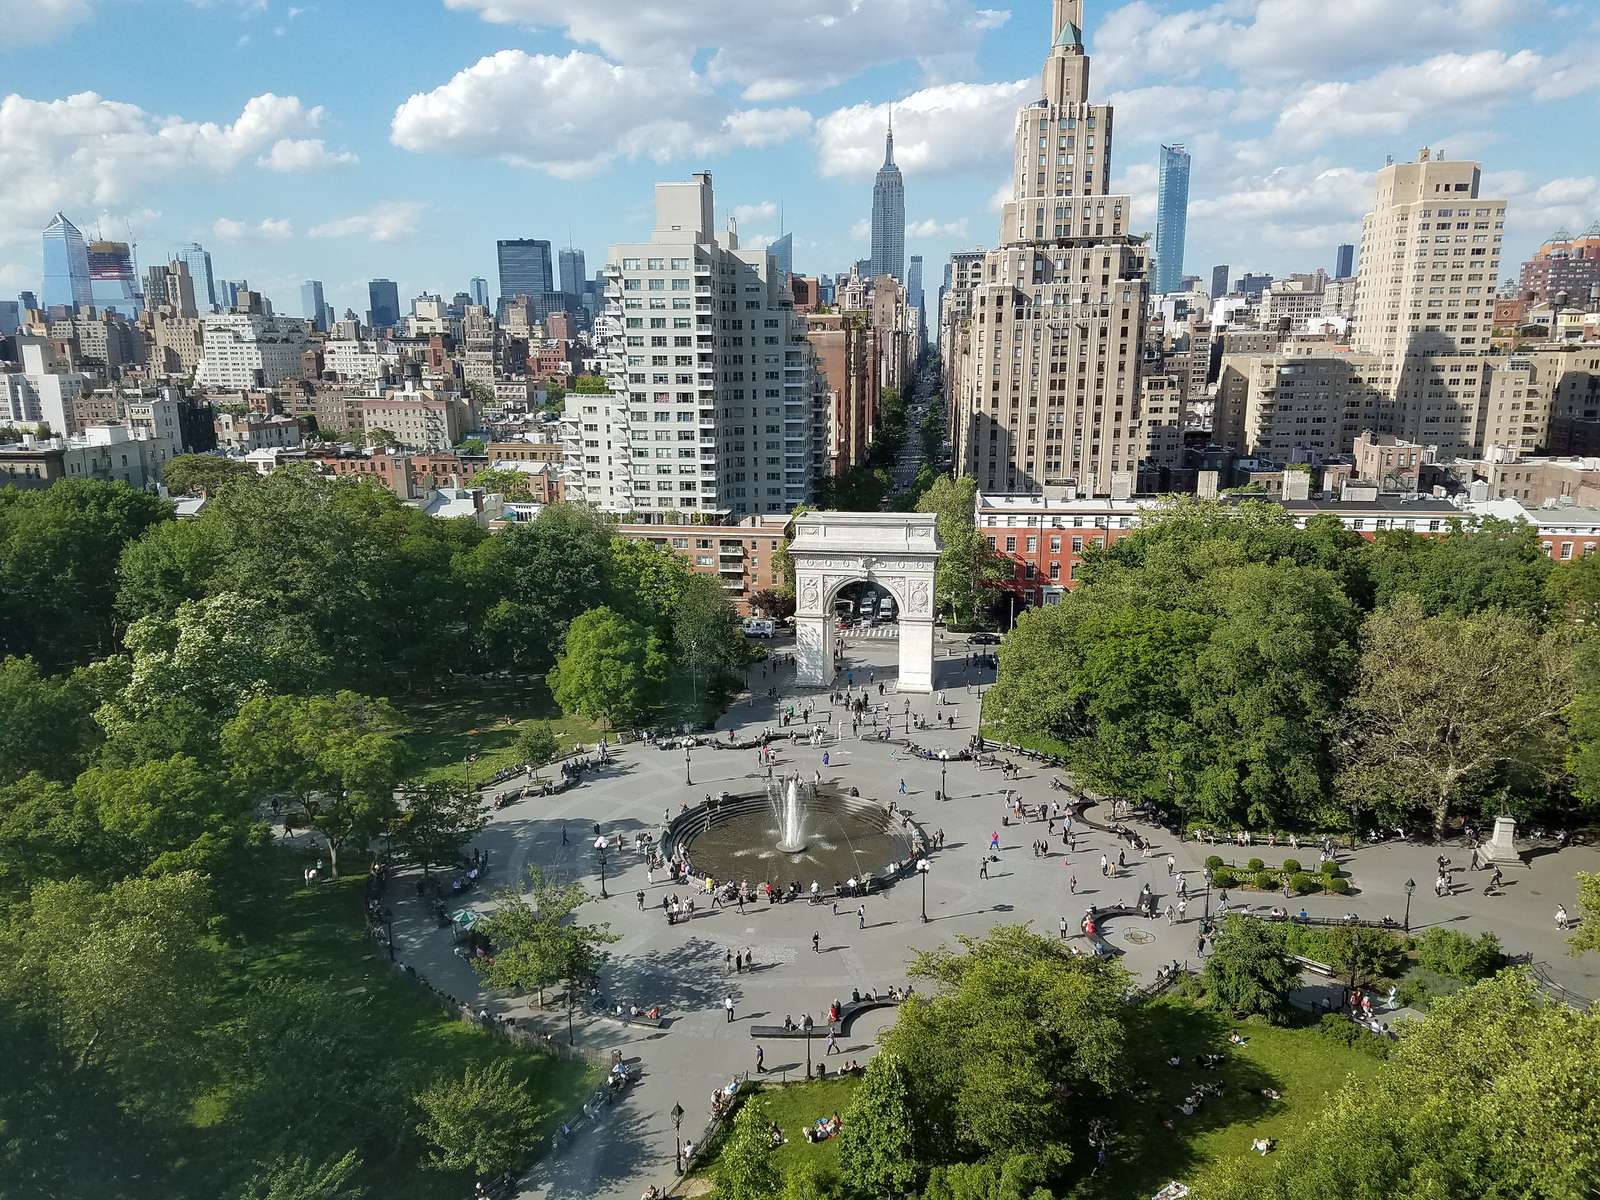 Washington Square Park puzzle online from photo